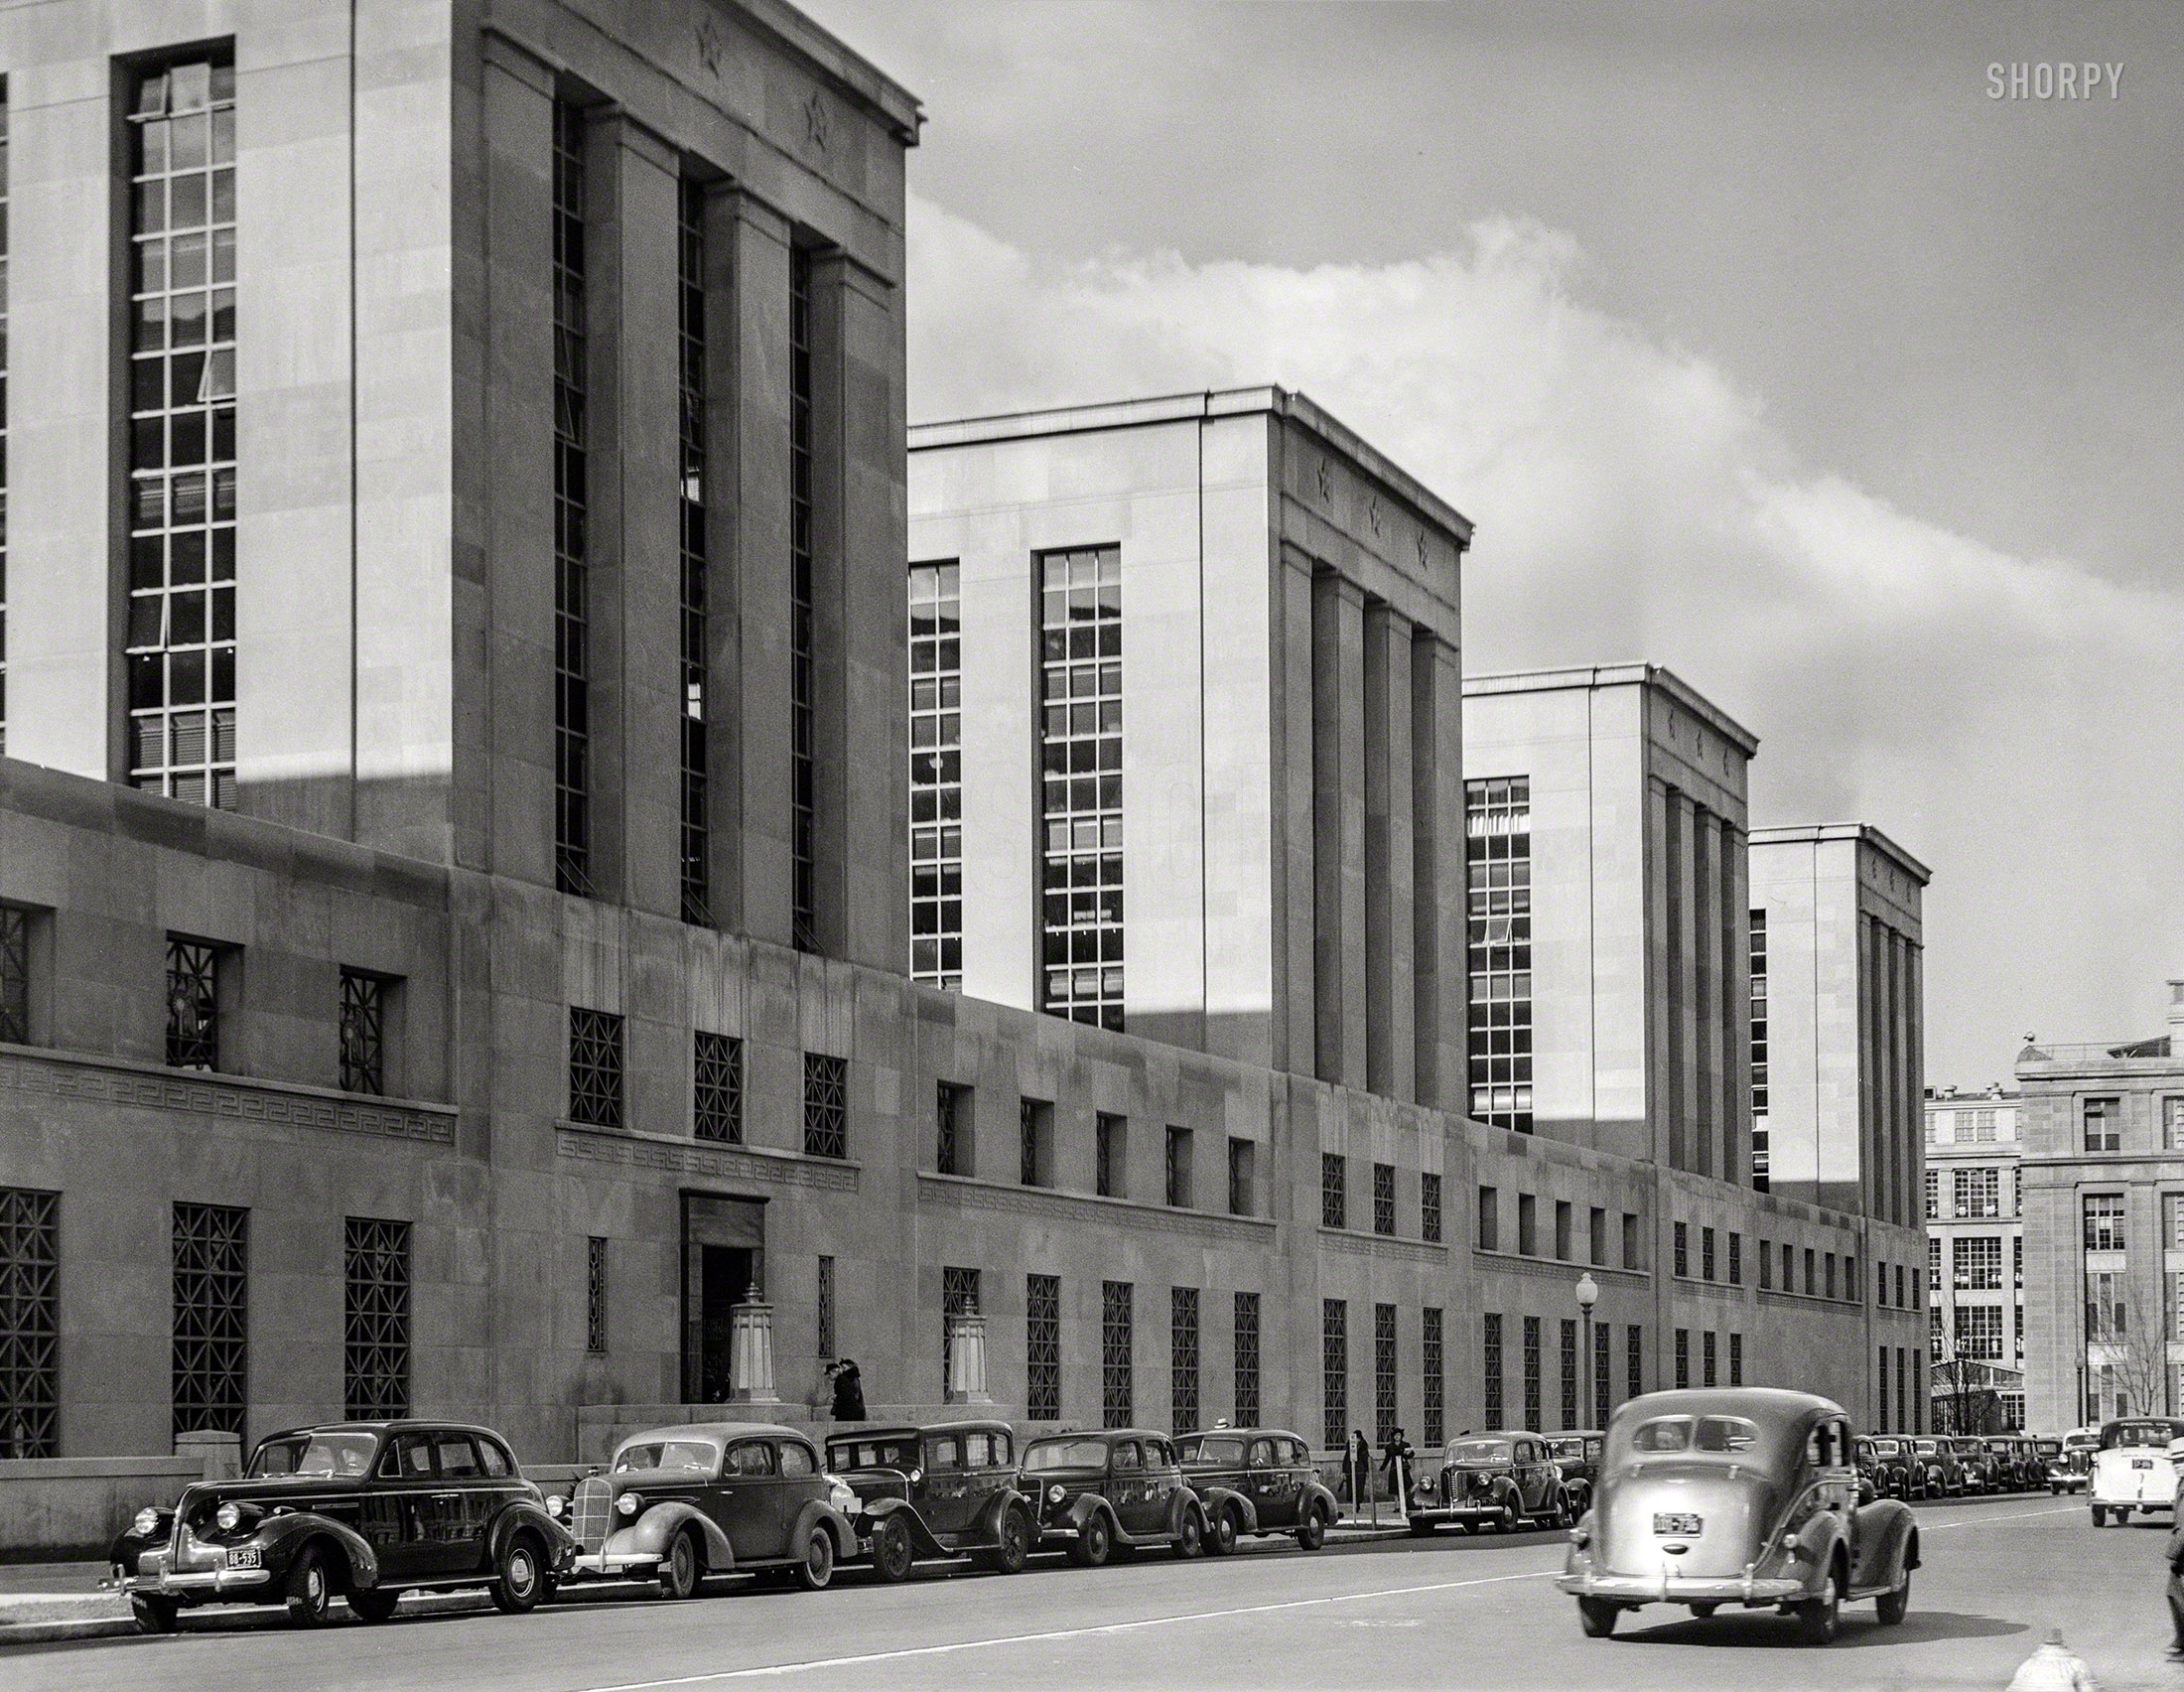 Washington, D.C., circa 1940. "Bureau of Engraving and Printing Annex, C Street S.W." 4x5 inch acetate negative. View full size.